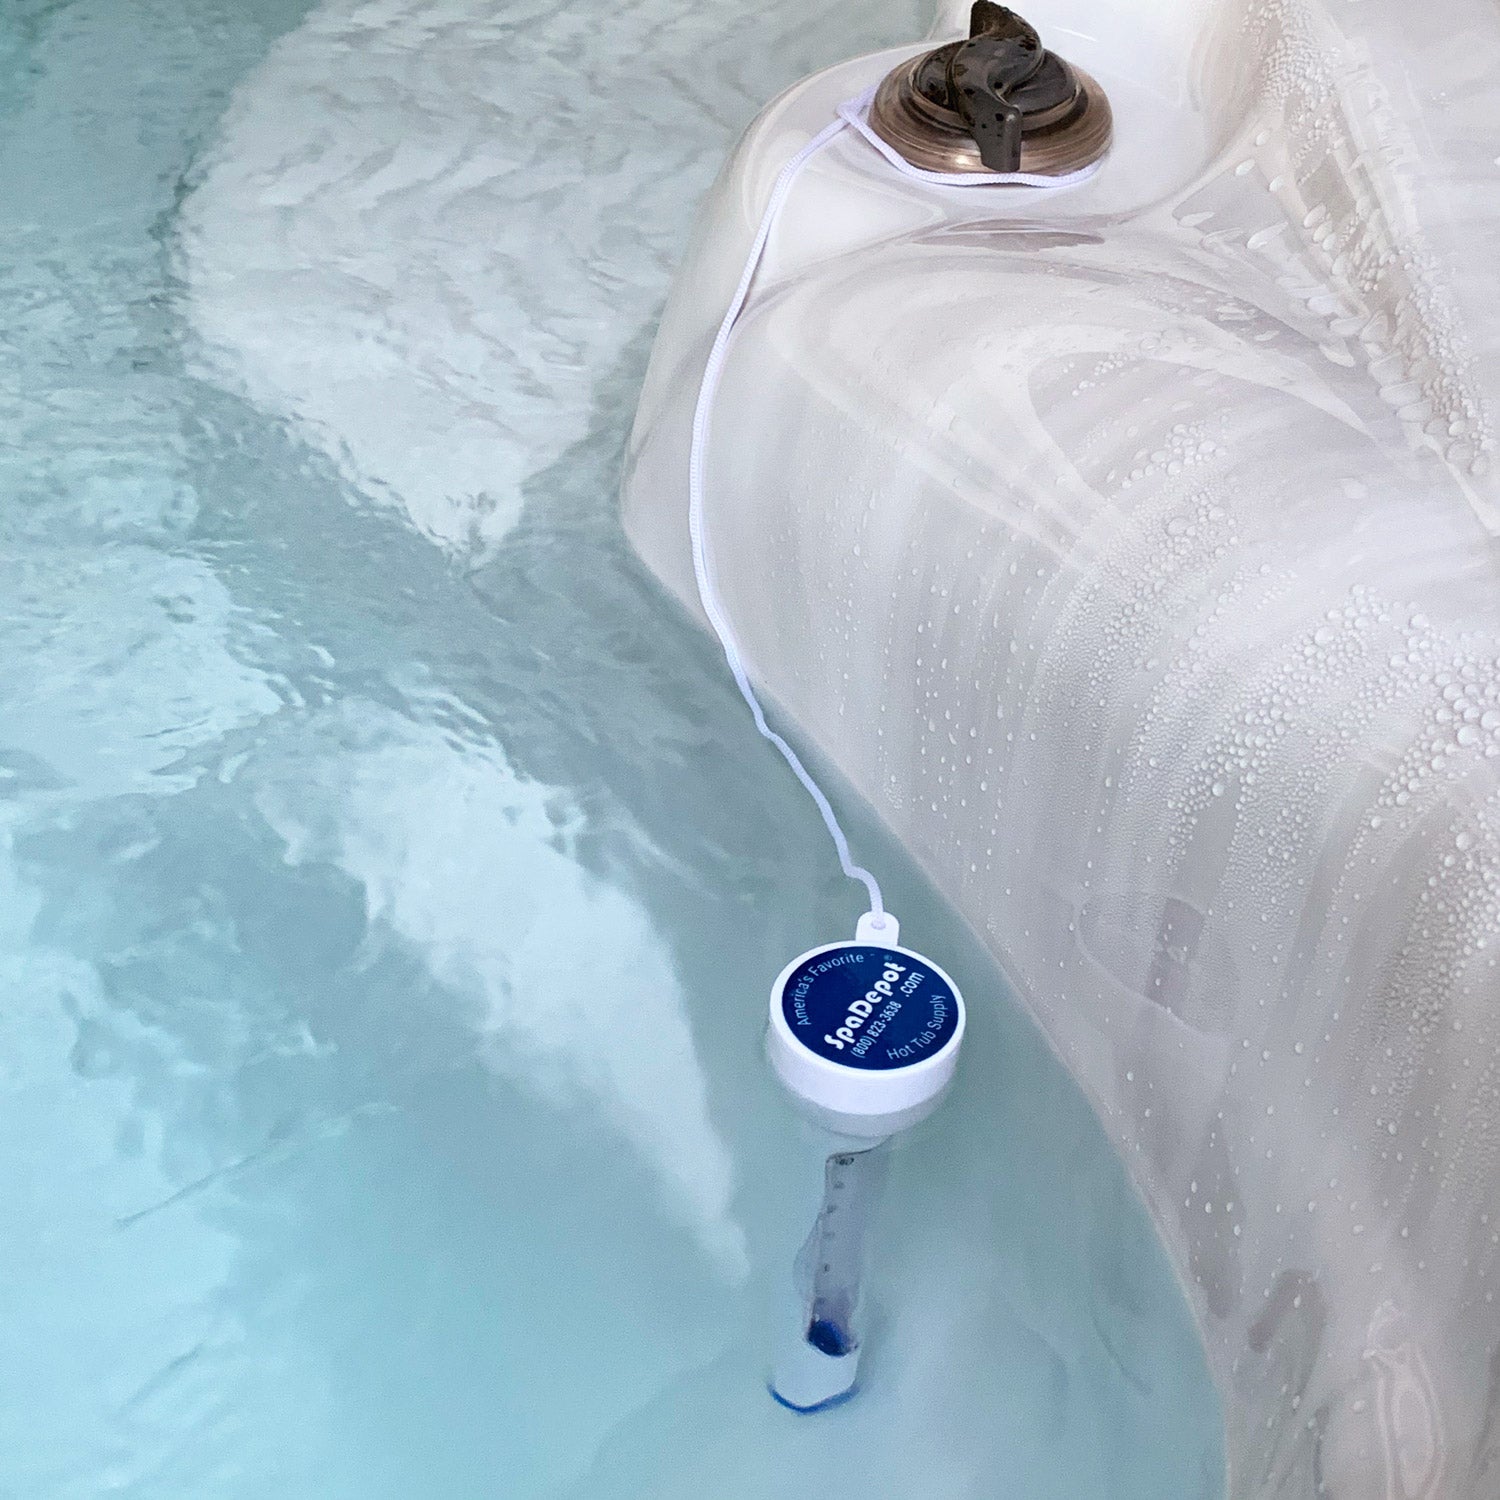 2 Pcs Floating Buoy Swimming Pool Thermometer Spa Hot Tub Bath